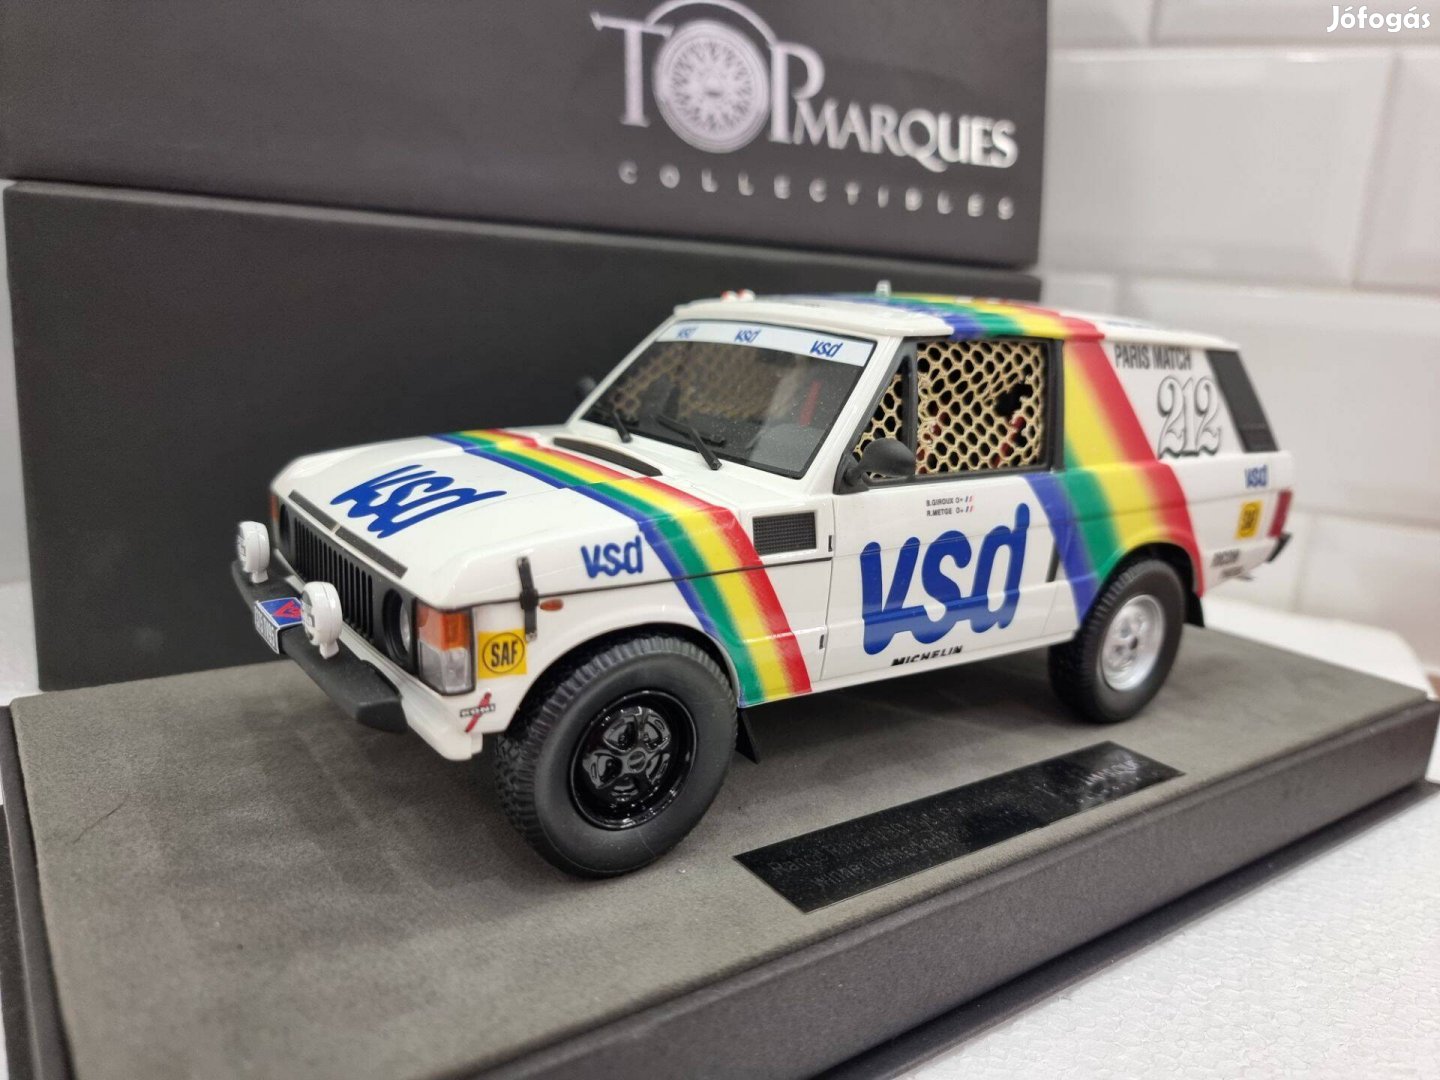 1/18 1:18 Range Rover VSD Párizs-Dakar rally winner 1981, Top Marques